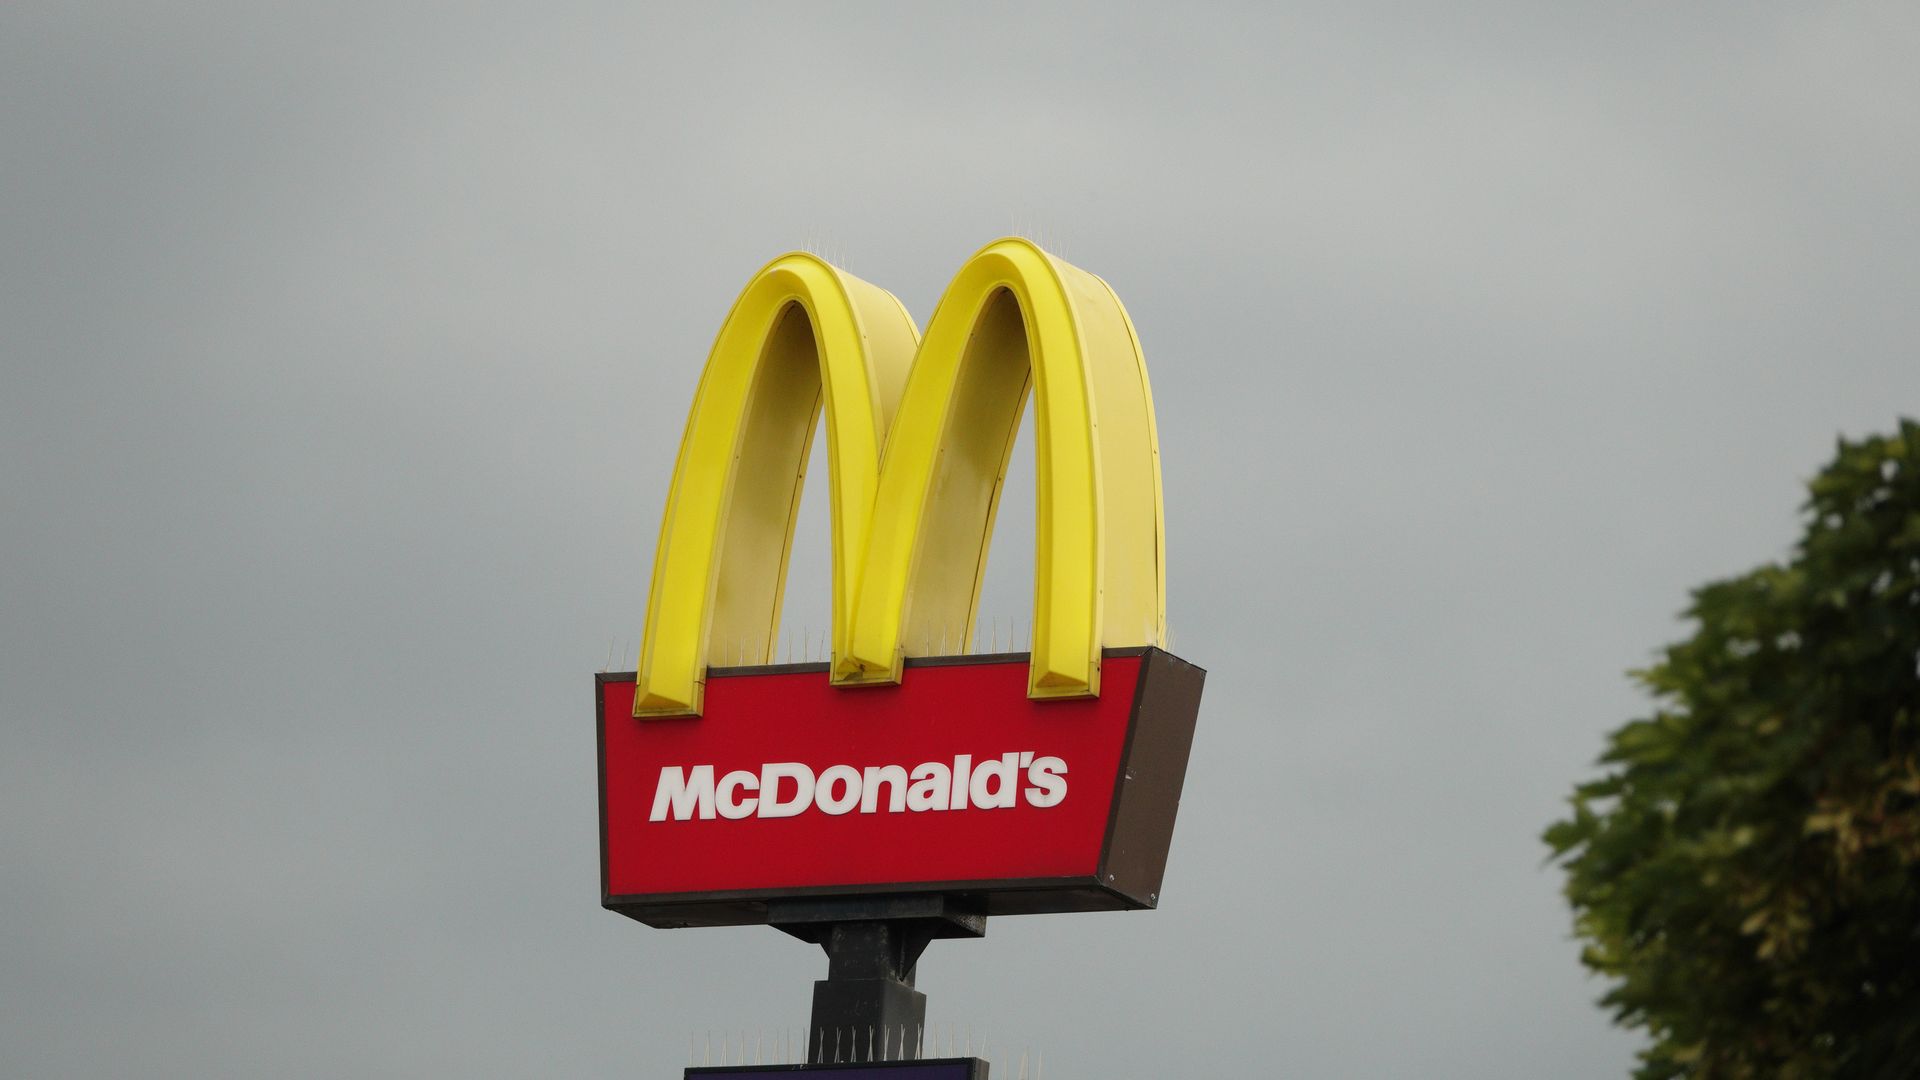 McDonald's sign with logo